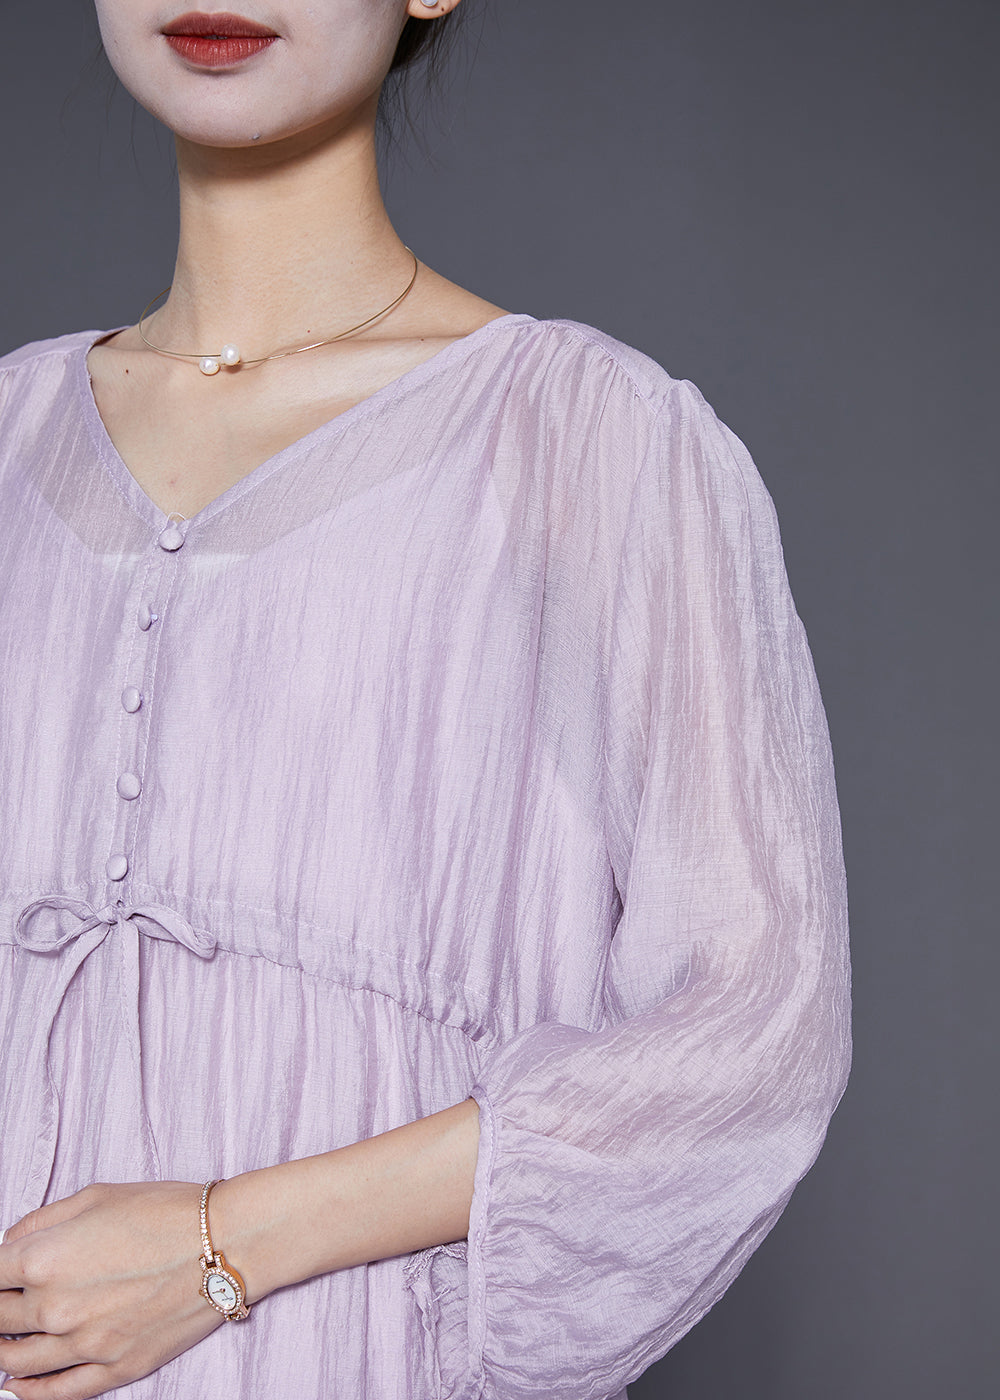 Diy Light Purple V Neck Cinched Silk Cotton Long Dresses Summer